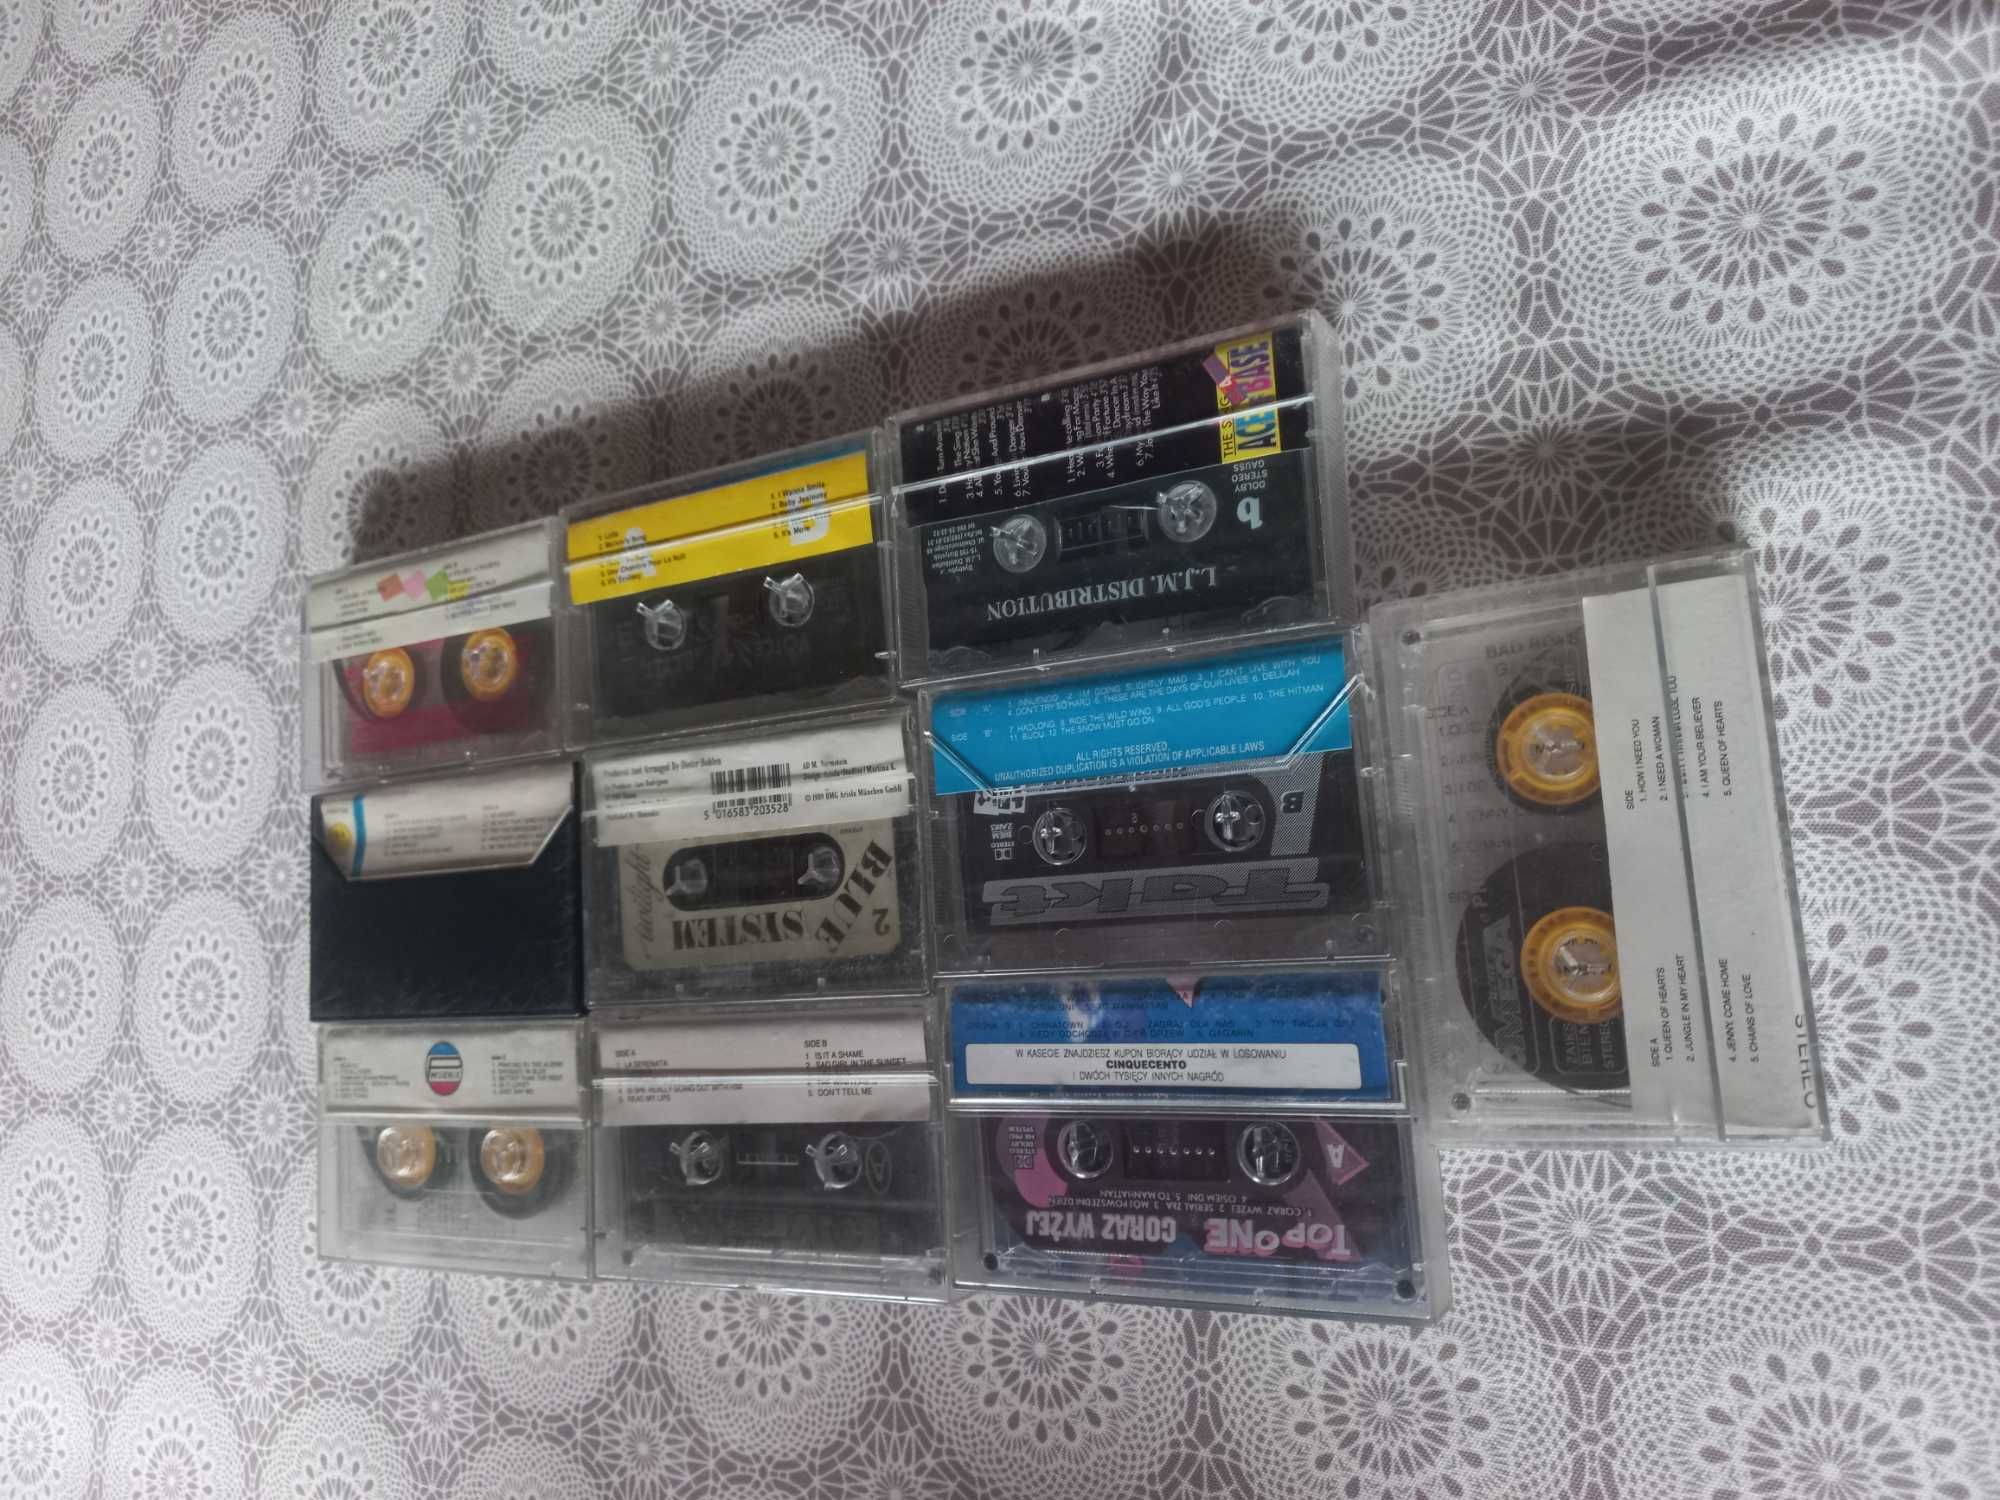 10 kaset nagnetofonowe stare